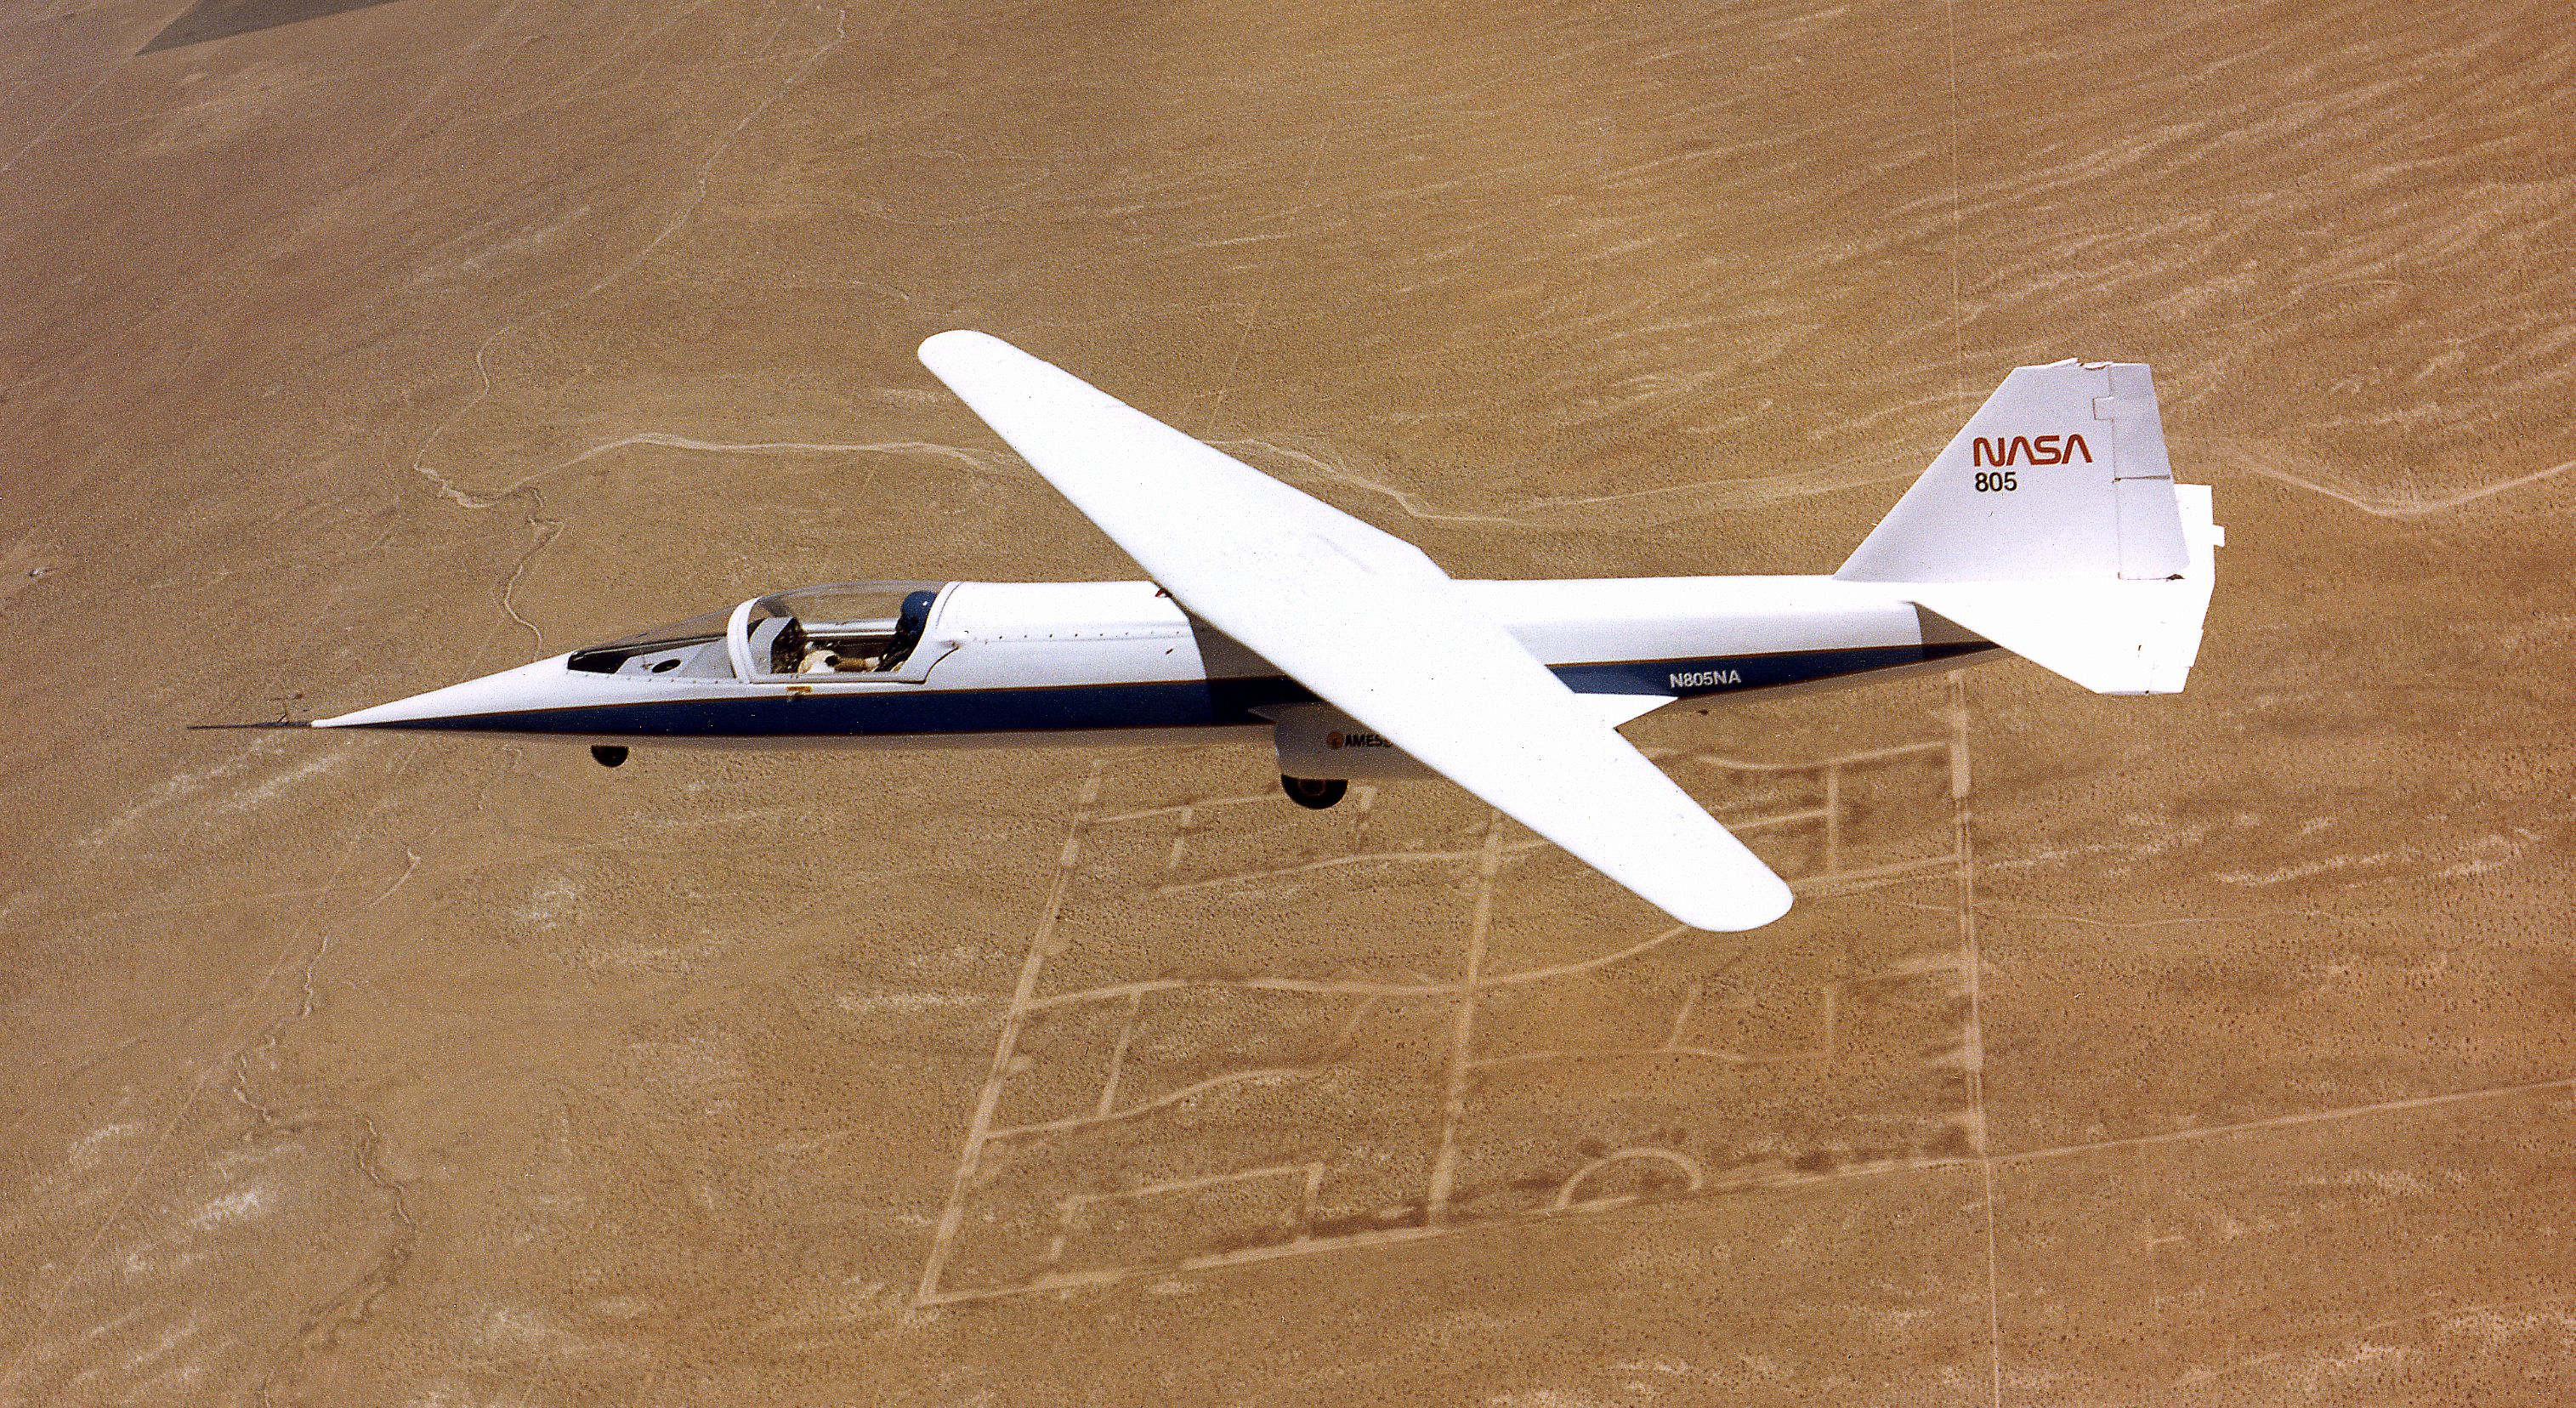 The NASA AD-1 aircraft in flight over a desert.